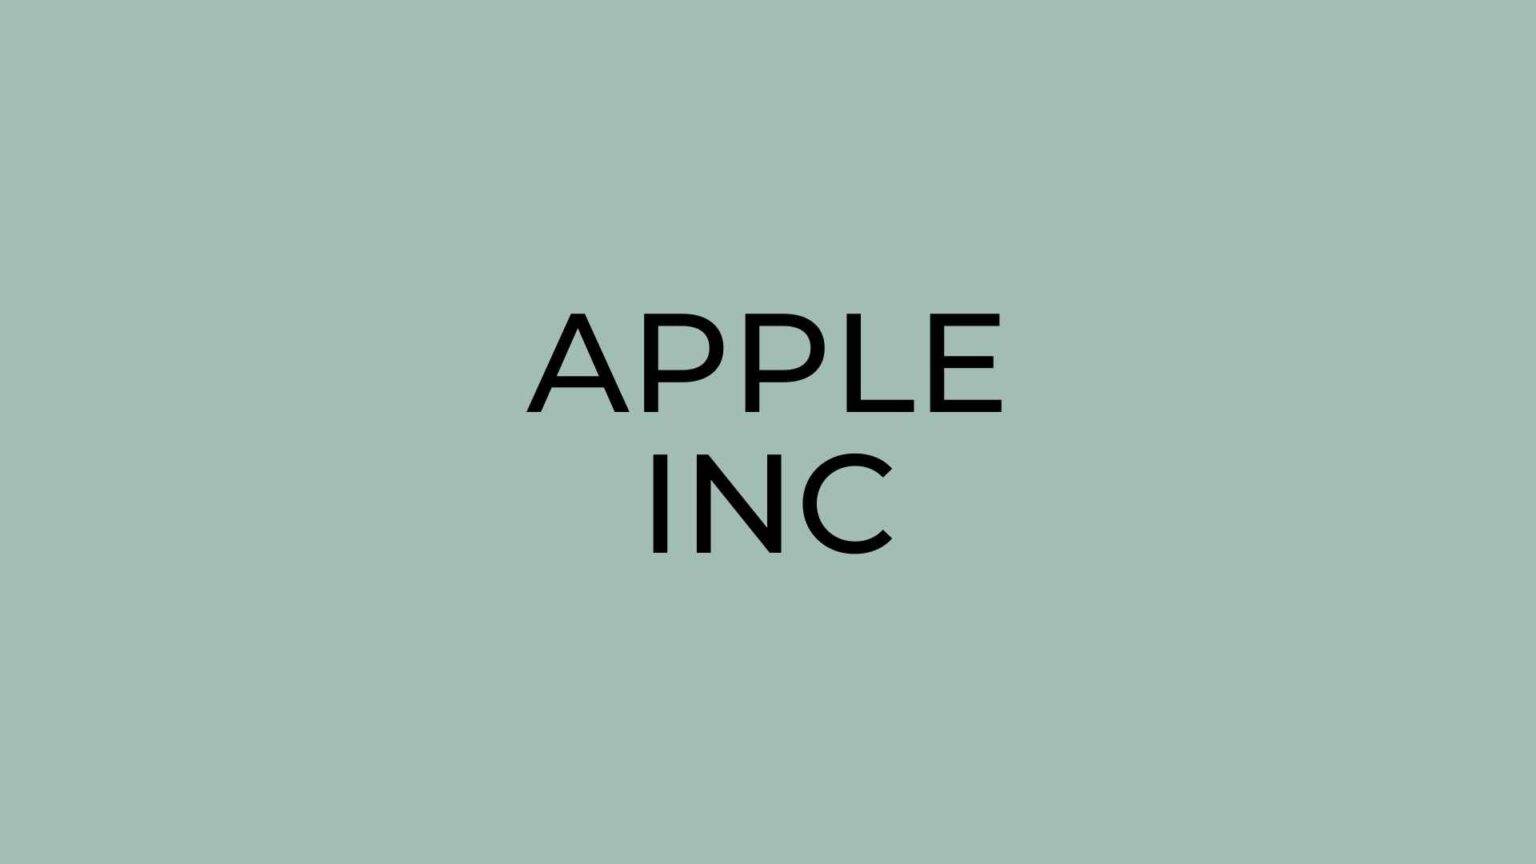 Apple Inc Apple stock price today